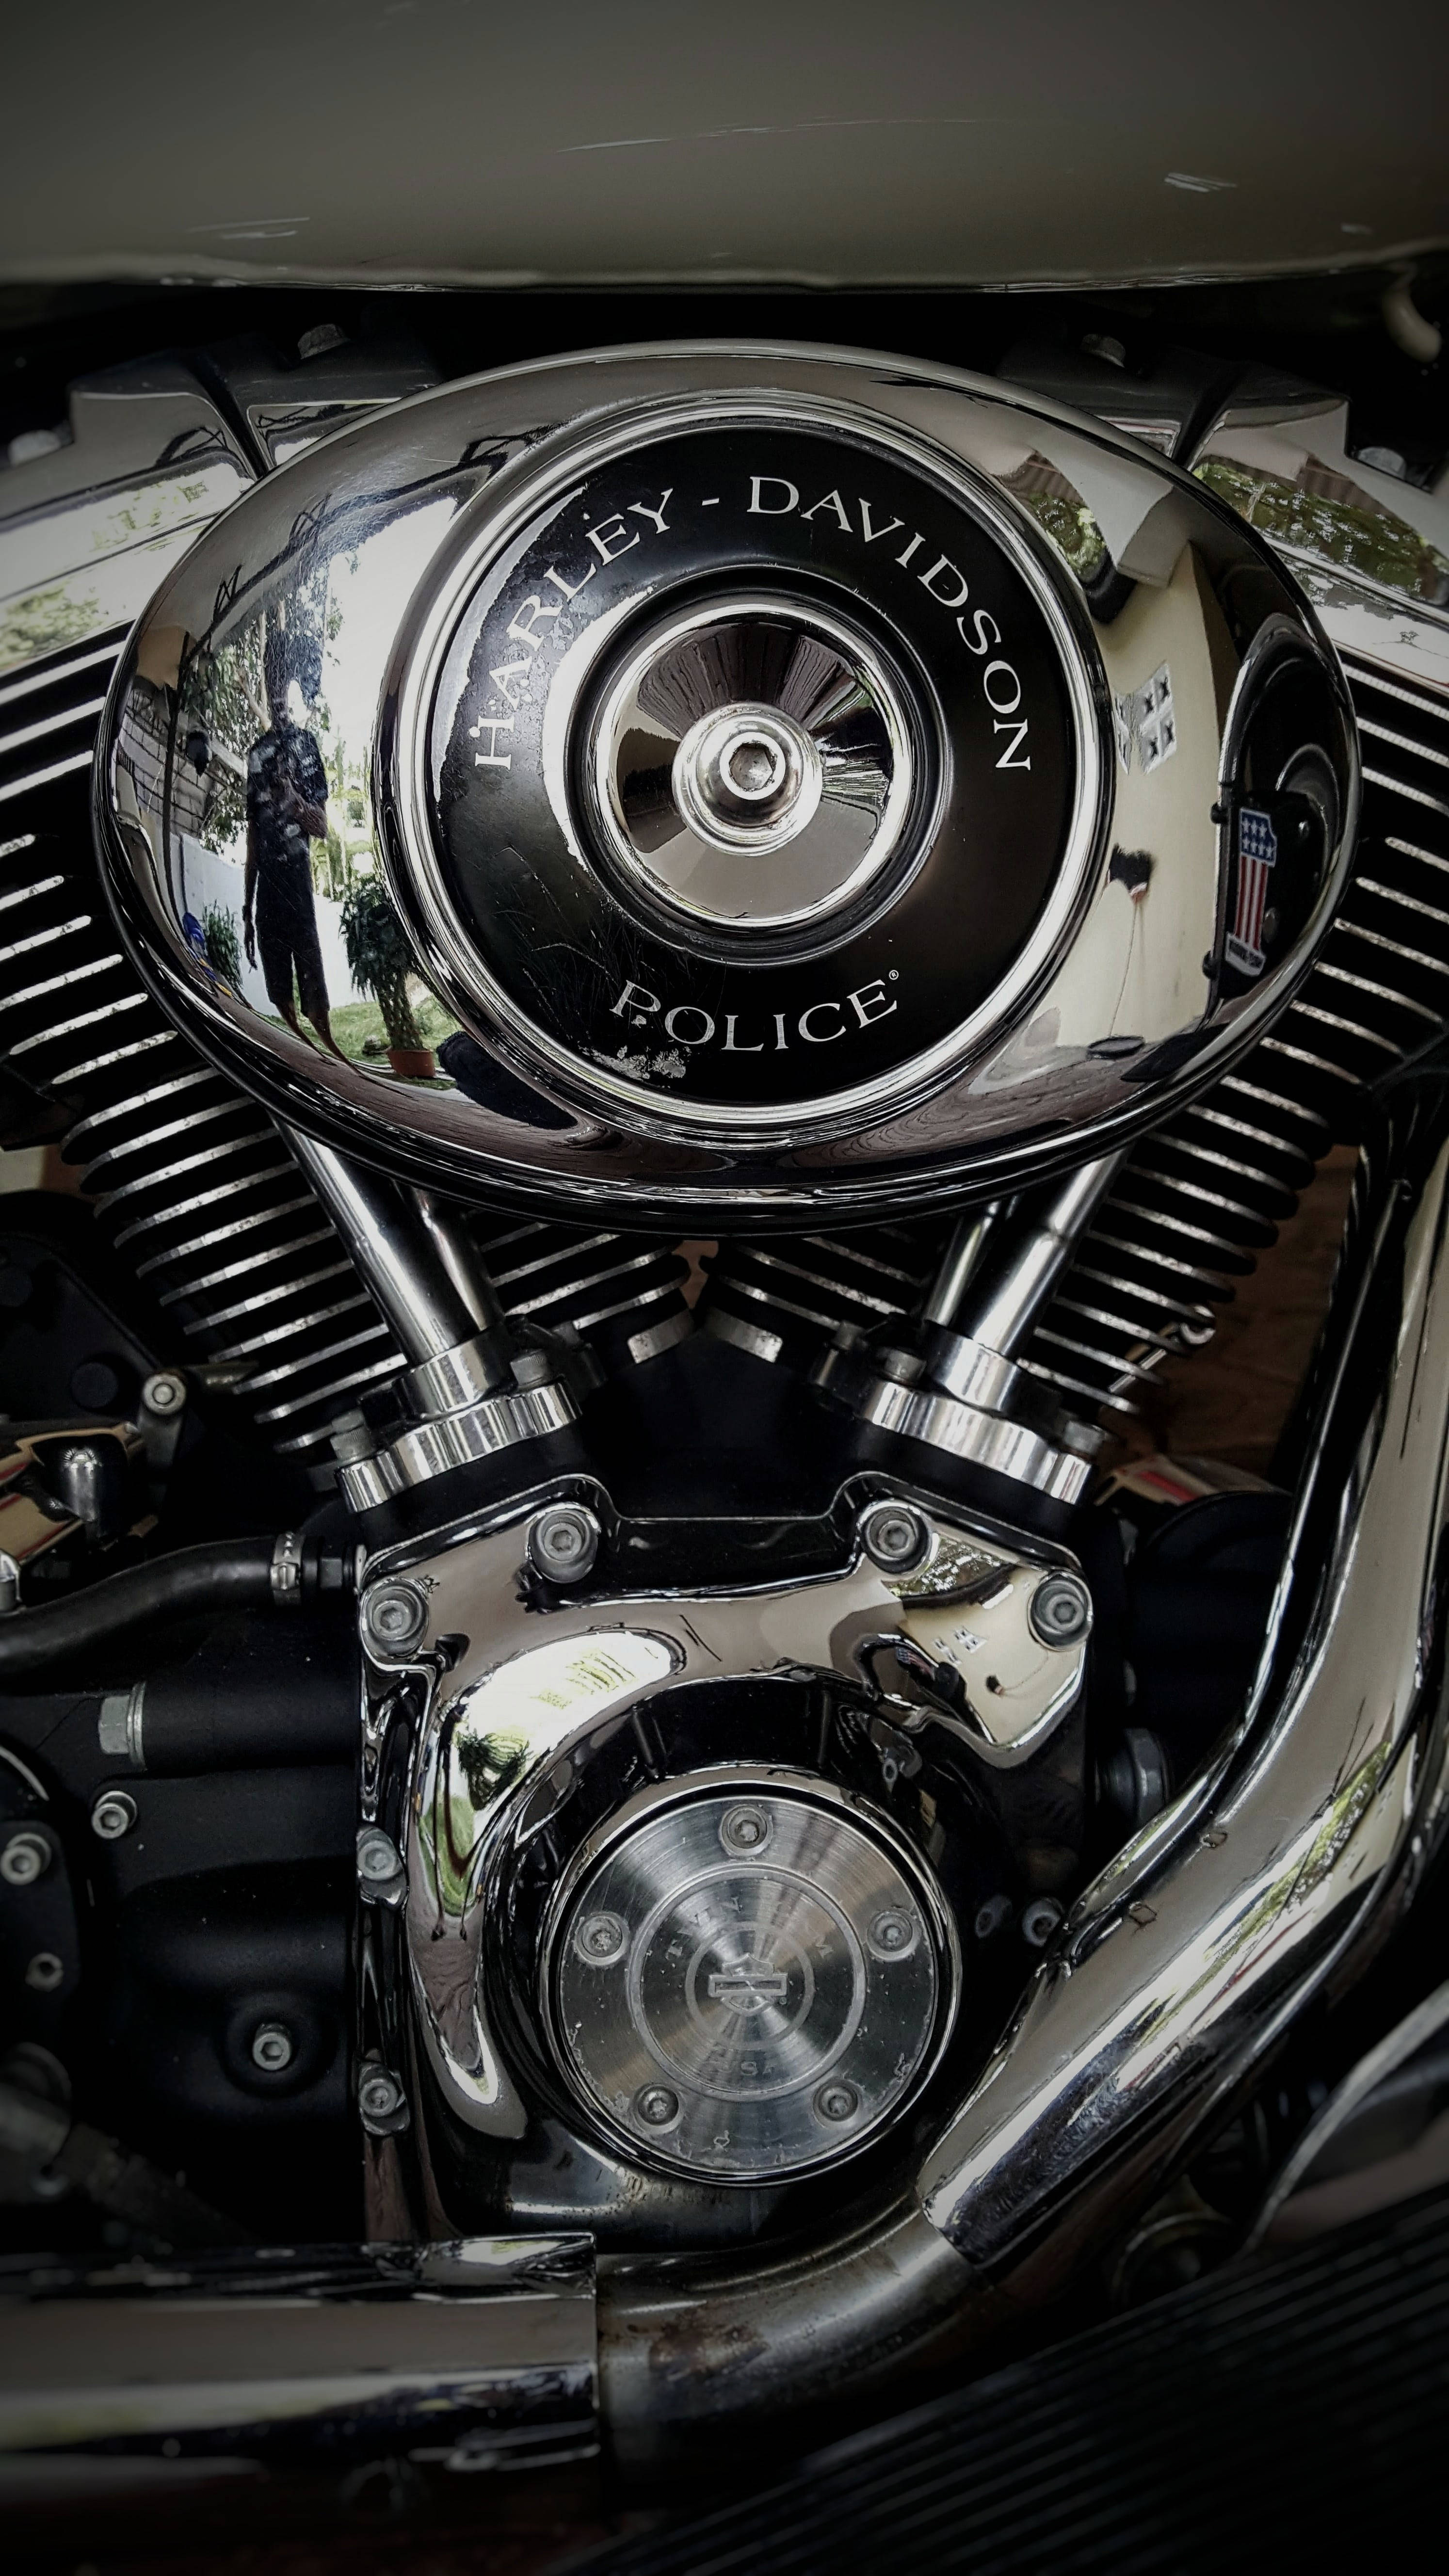  Motor Hintergrundbild 2988x5312. Download Engine Harley Davidson Mobile Wallpaper